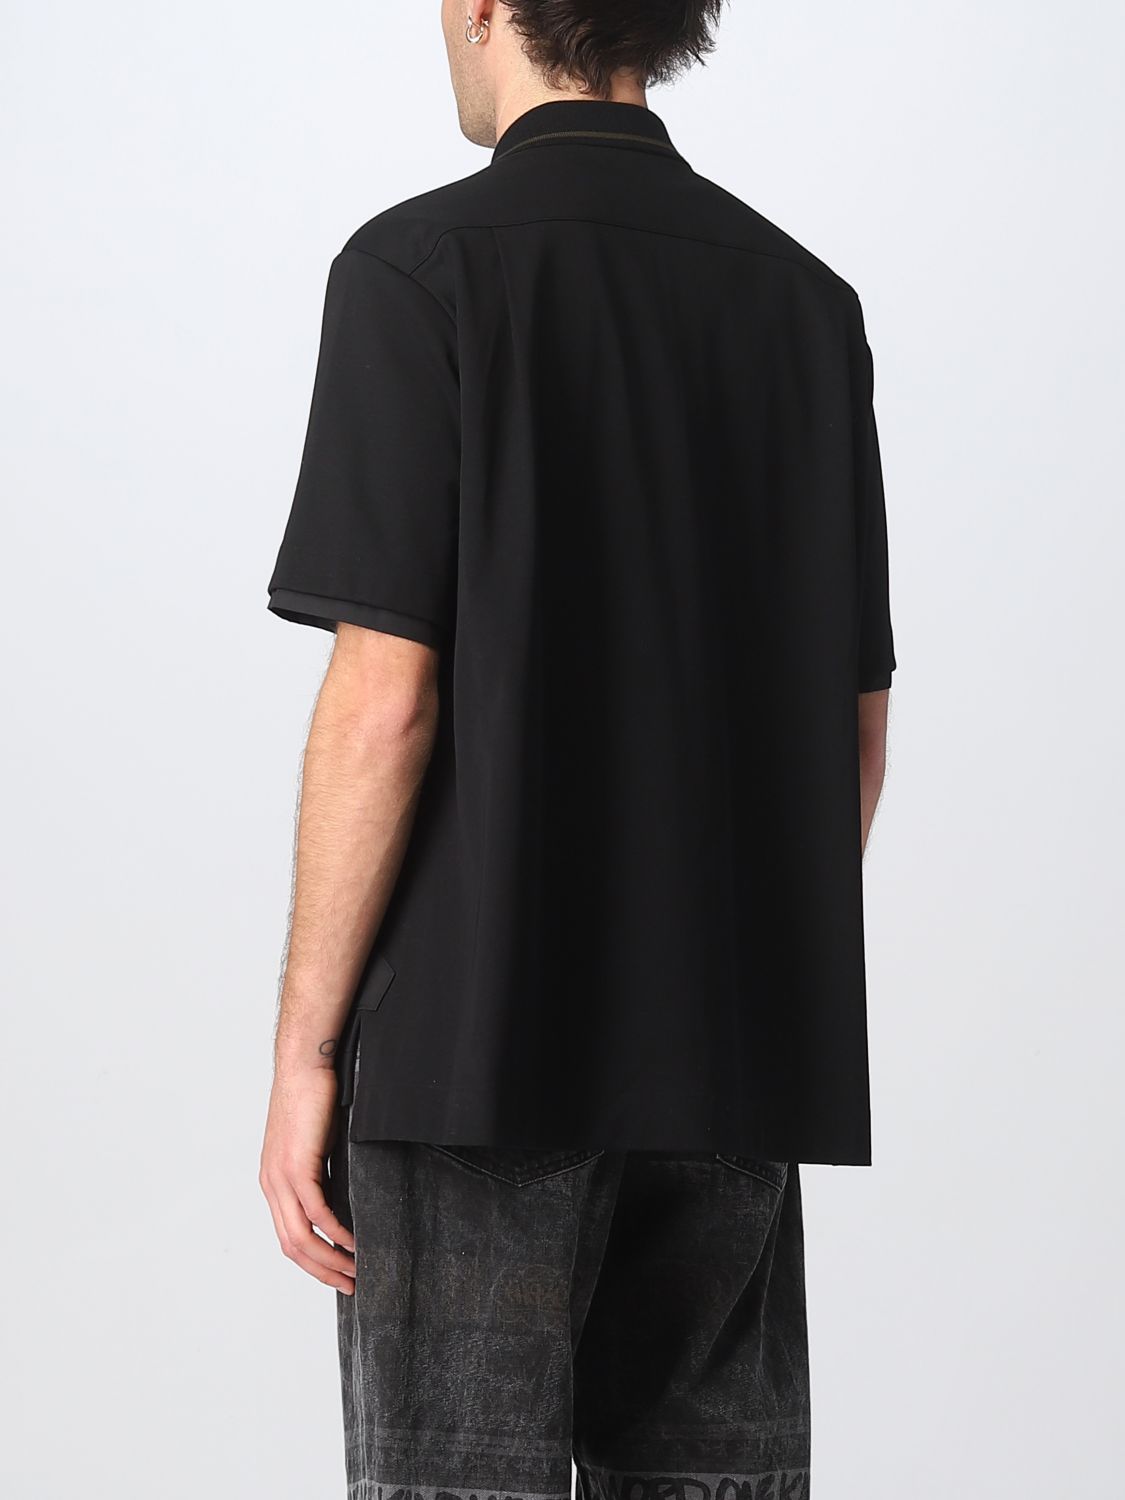 Shirt Sacai: Sacai shirt for man black 2